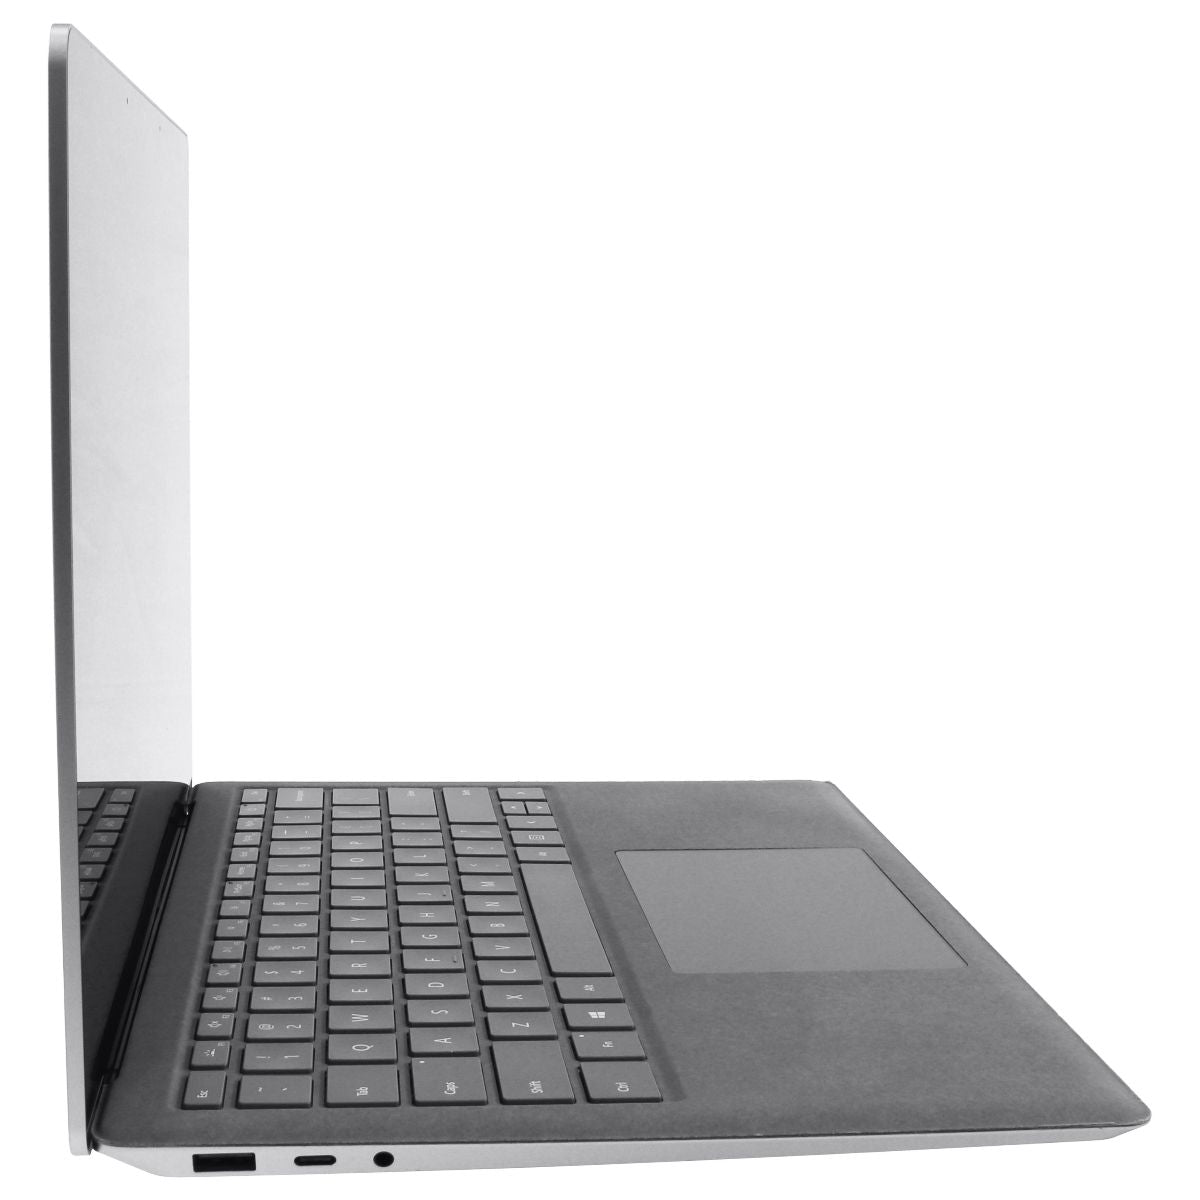 Microsoft Surface Laptop 4 (13.5-in) 1950 i5-1135G7 / 512GB SSD / 8GB - Platinum